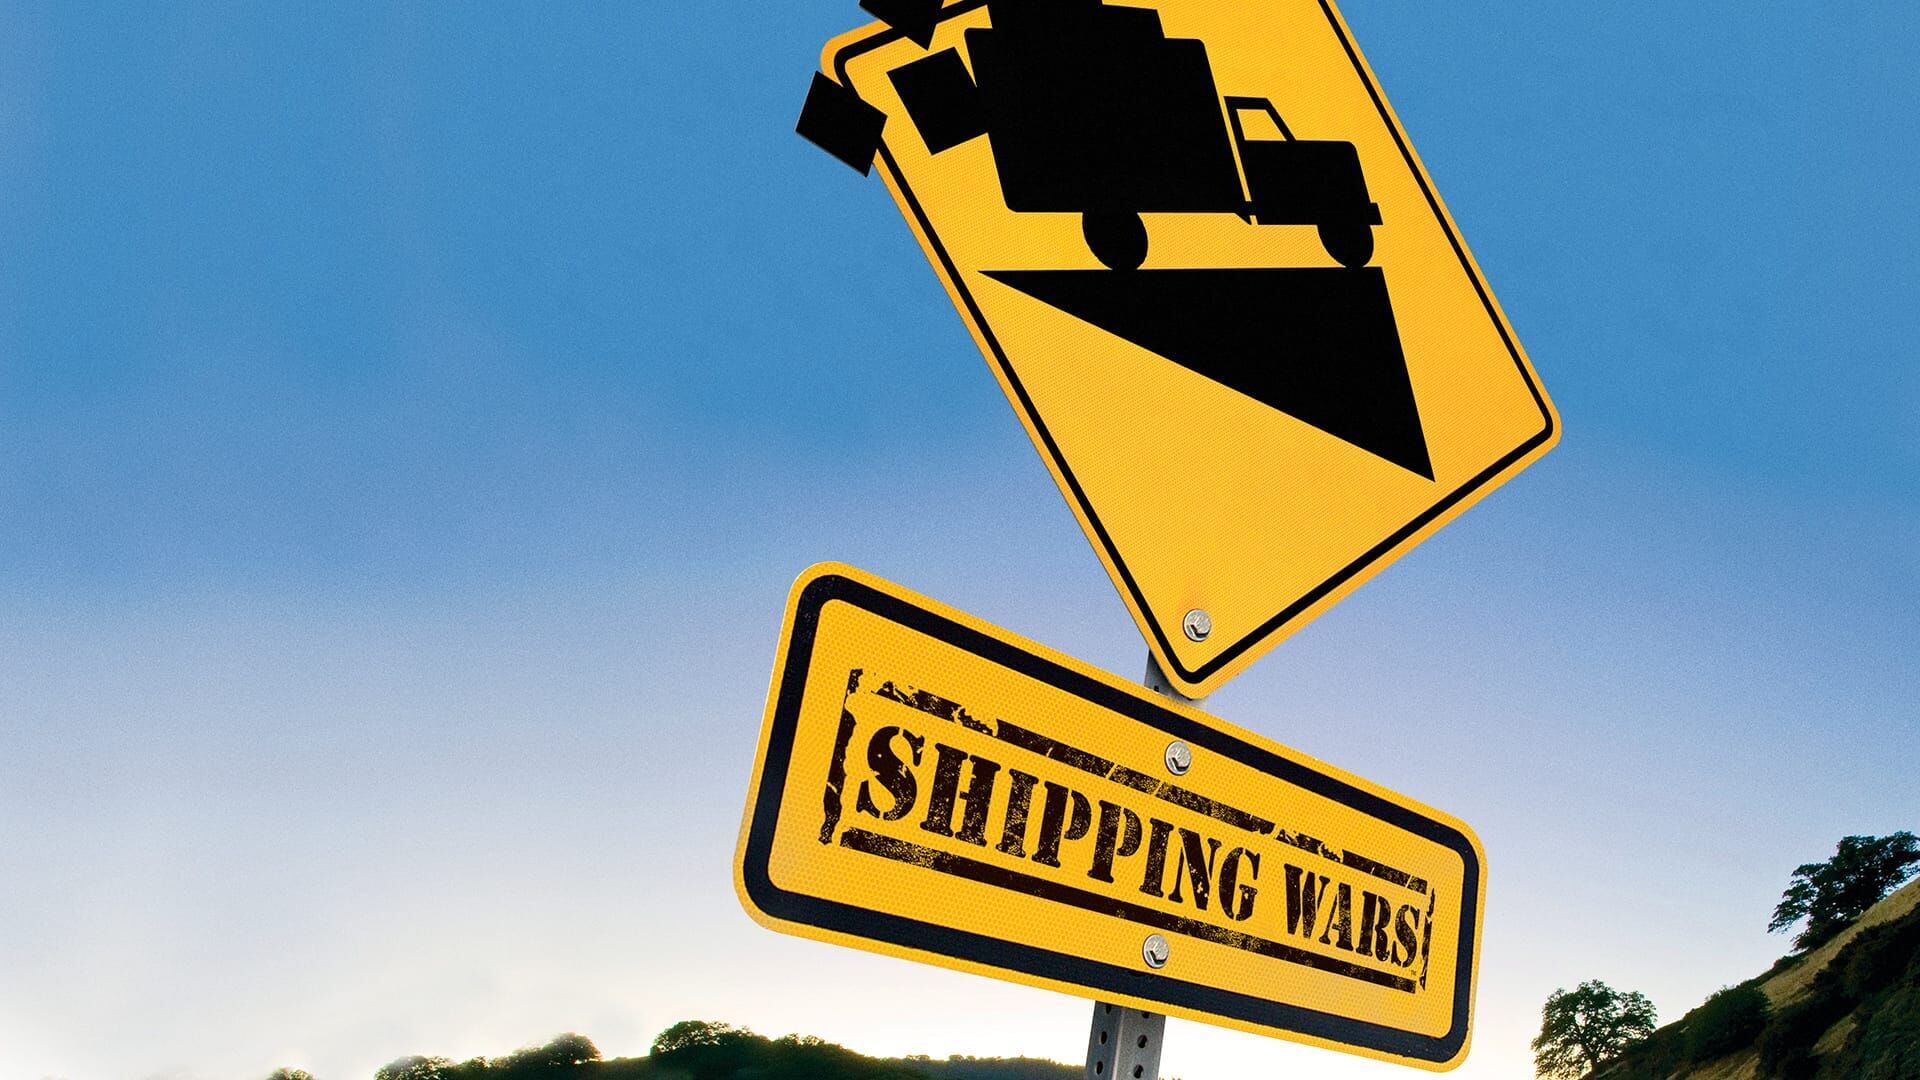 Shipping Wars – Die Transporter